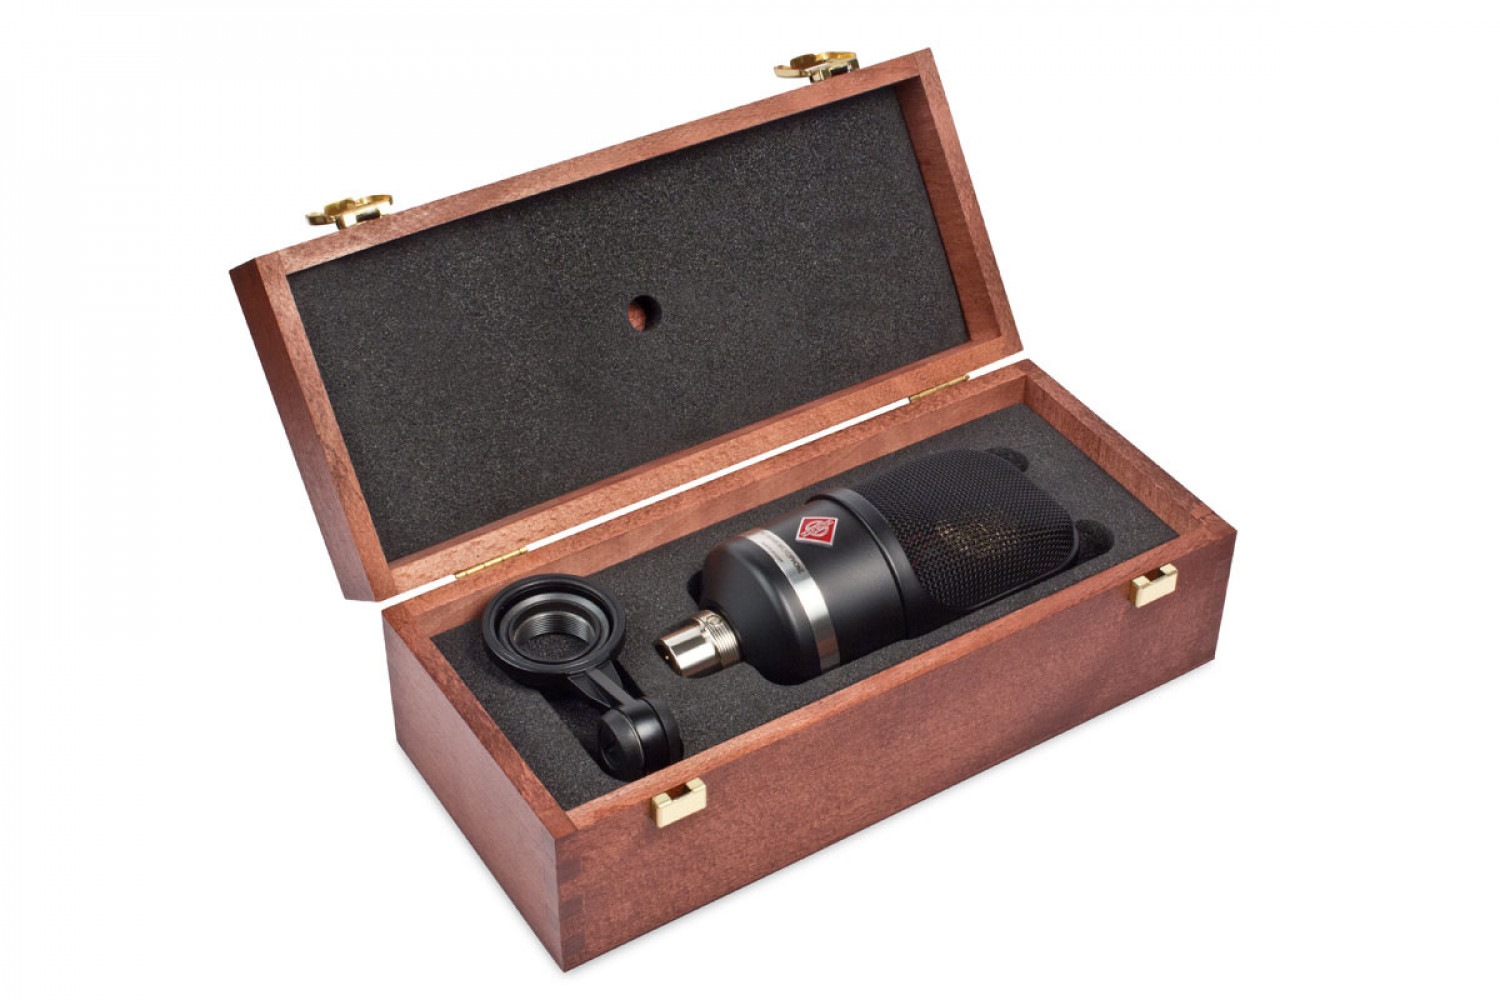 Neumann TLM 107 BK Large-Diaphragm Multipattern Condenser Microphone